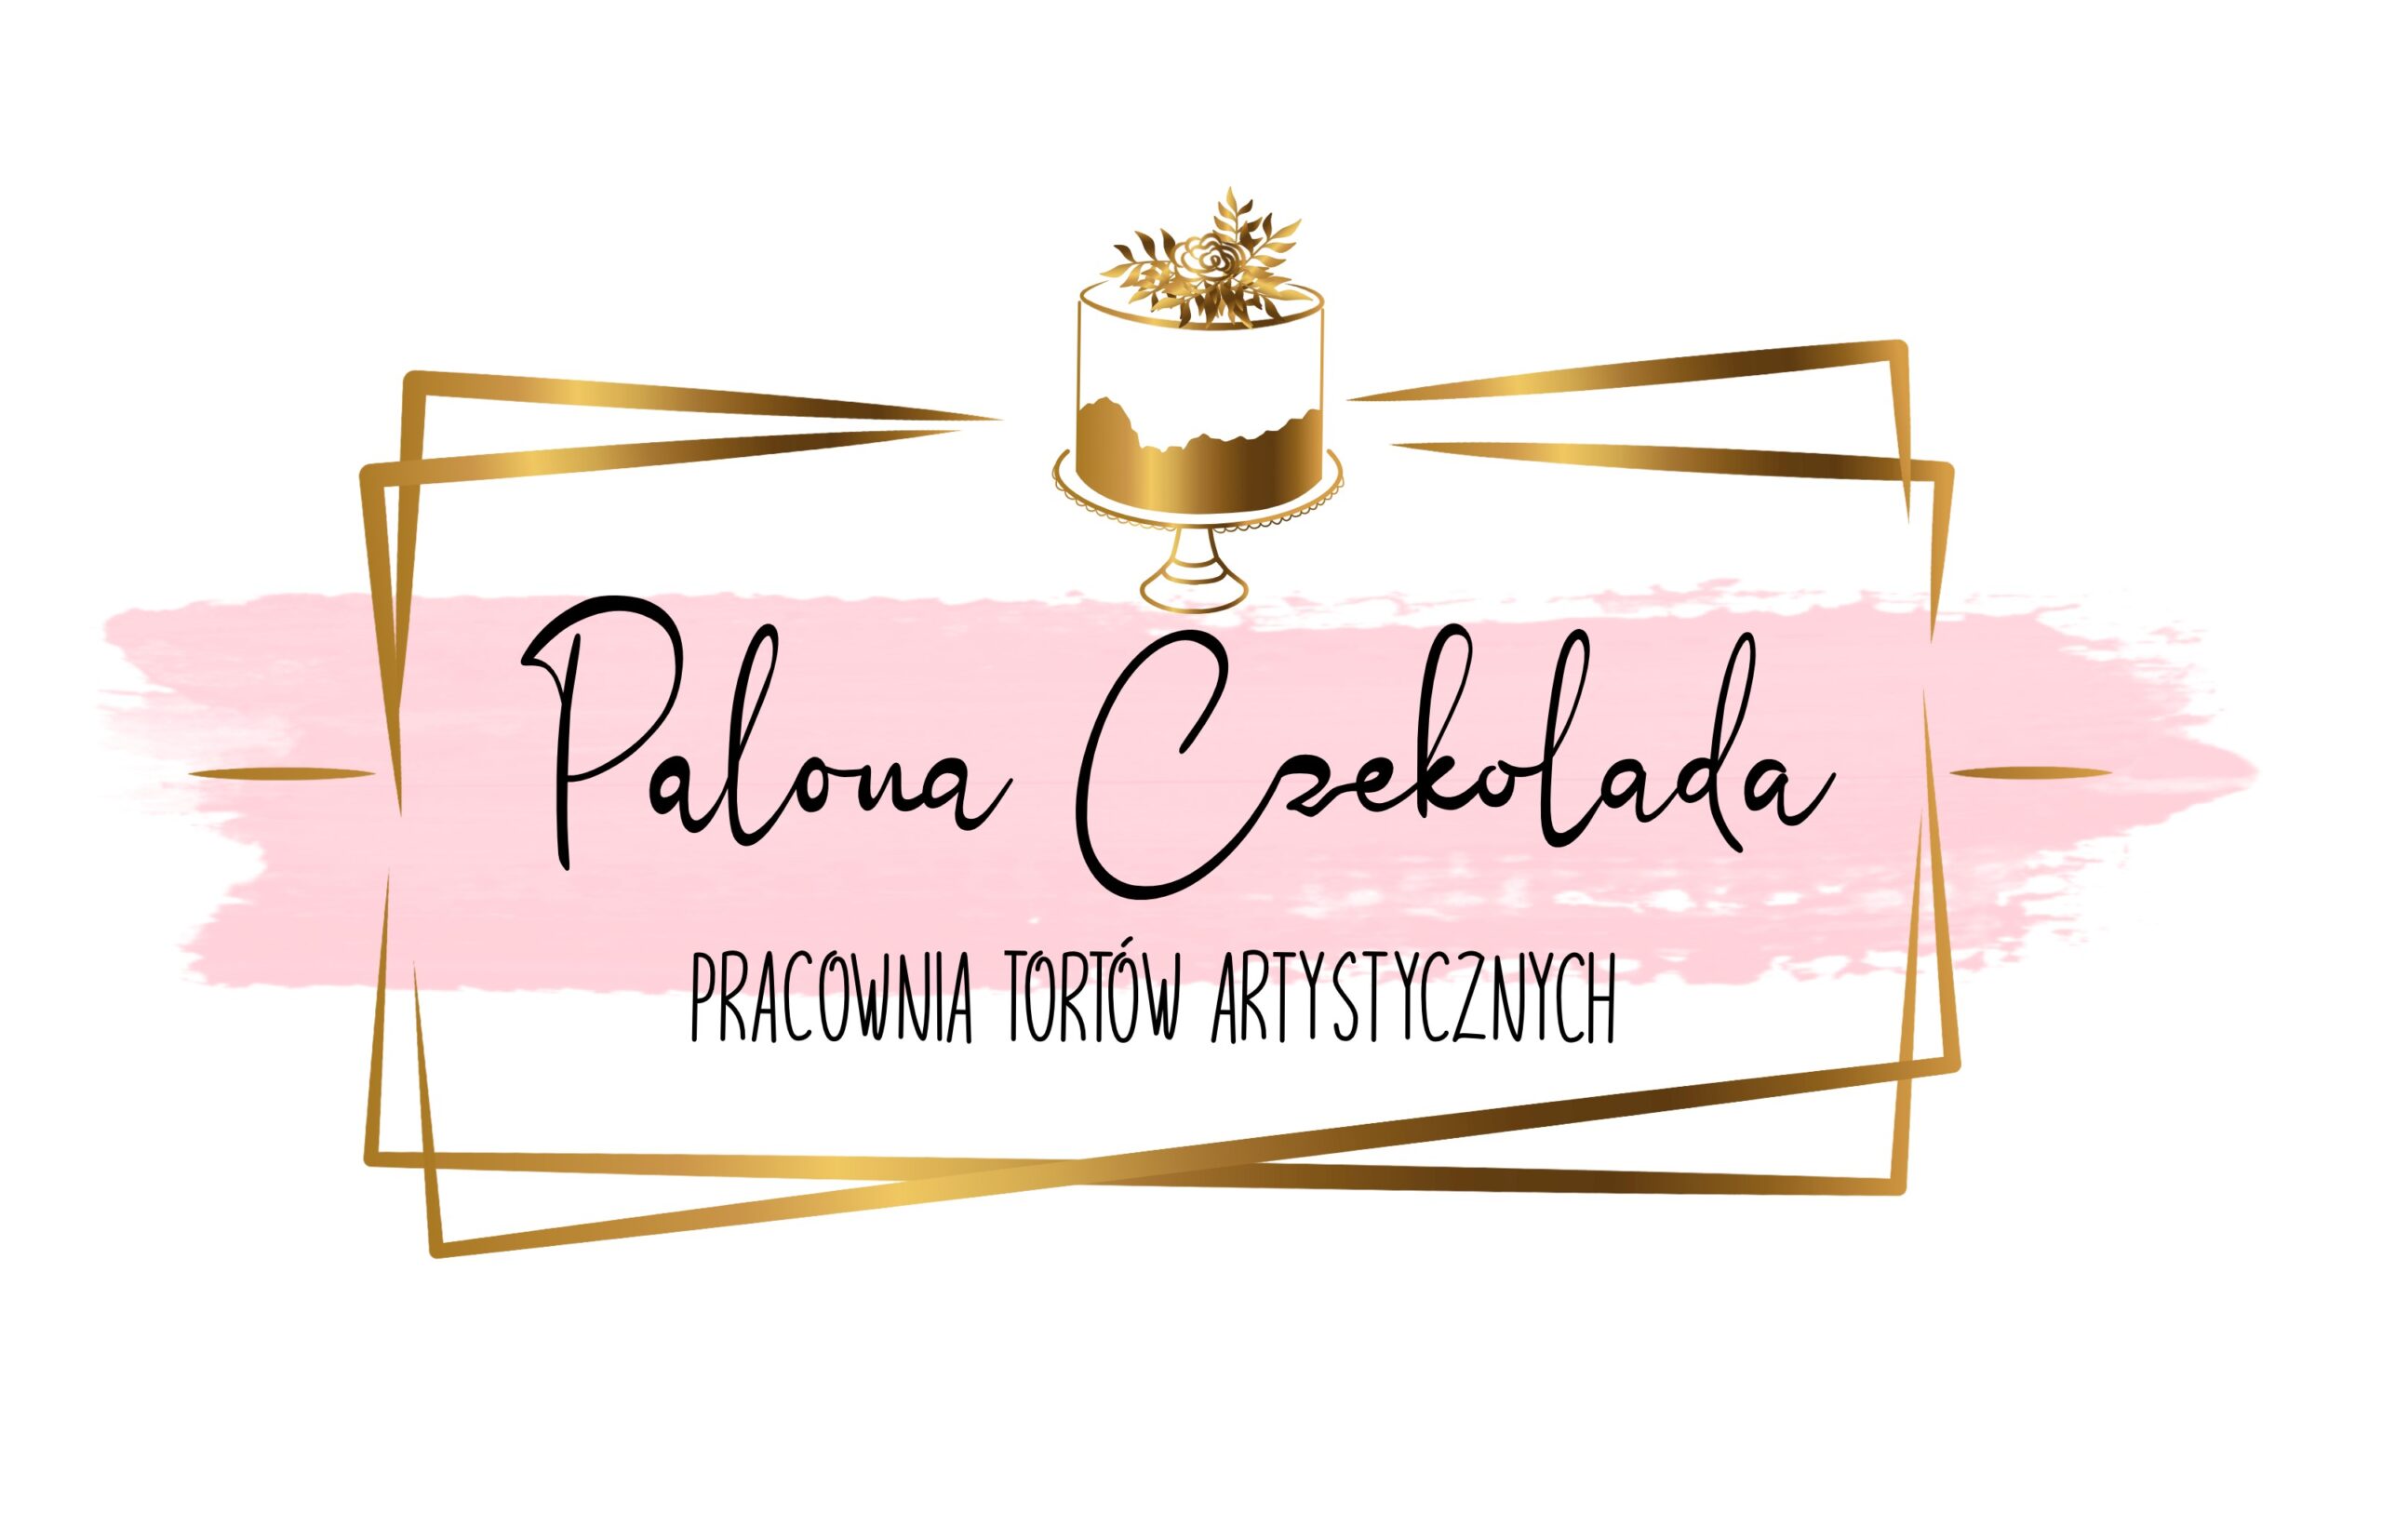 Logo: Palona czekolada